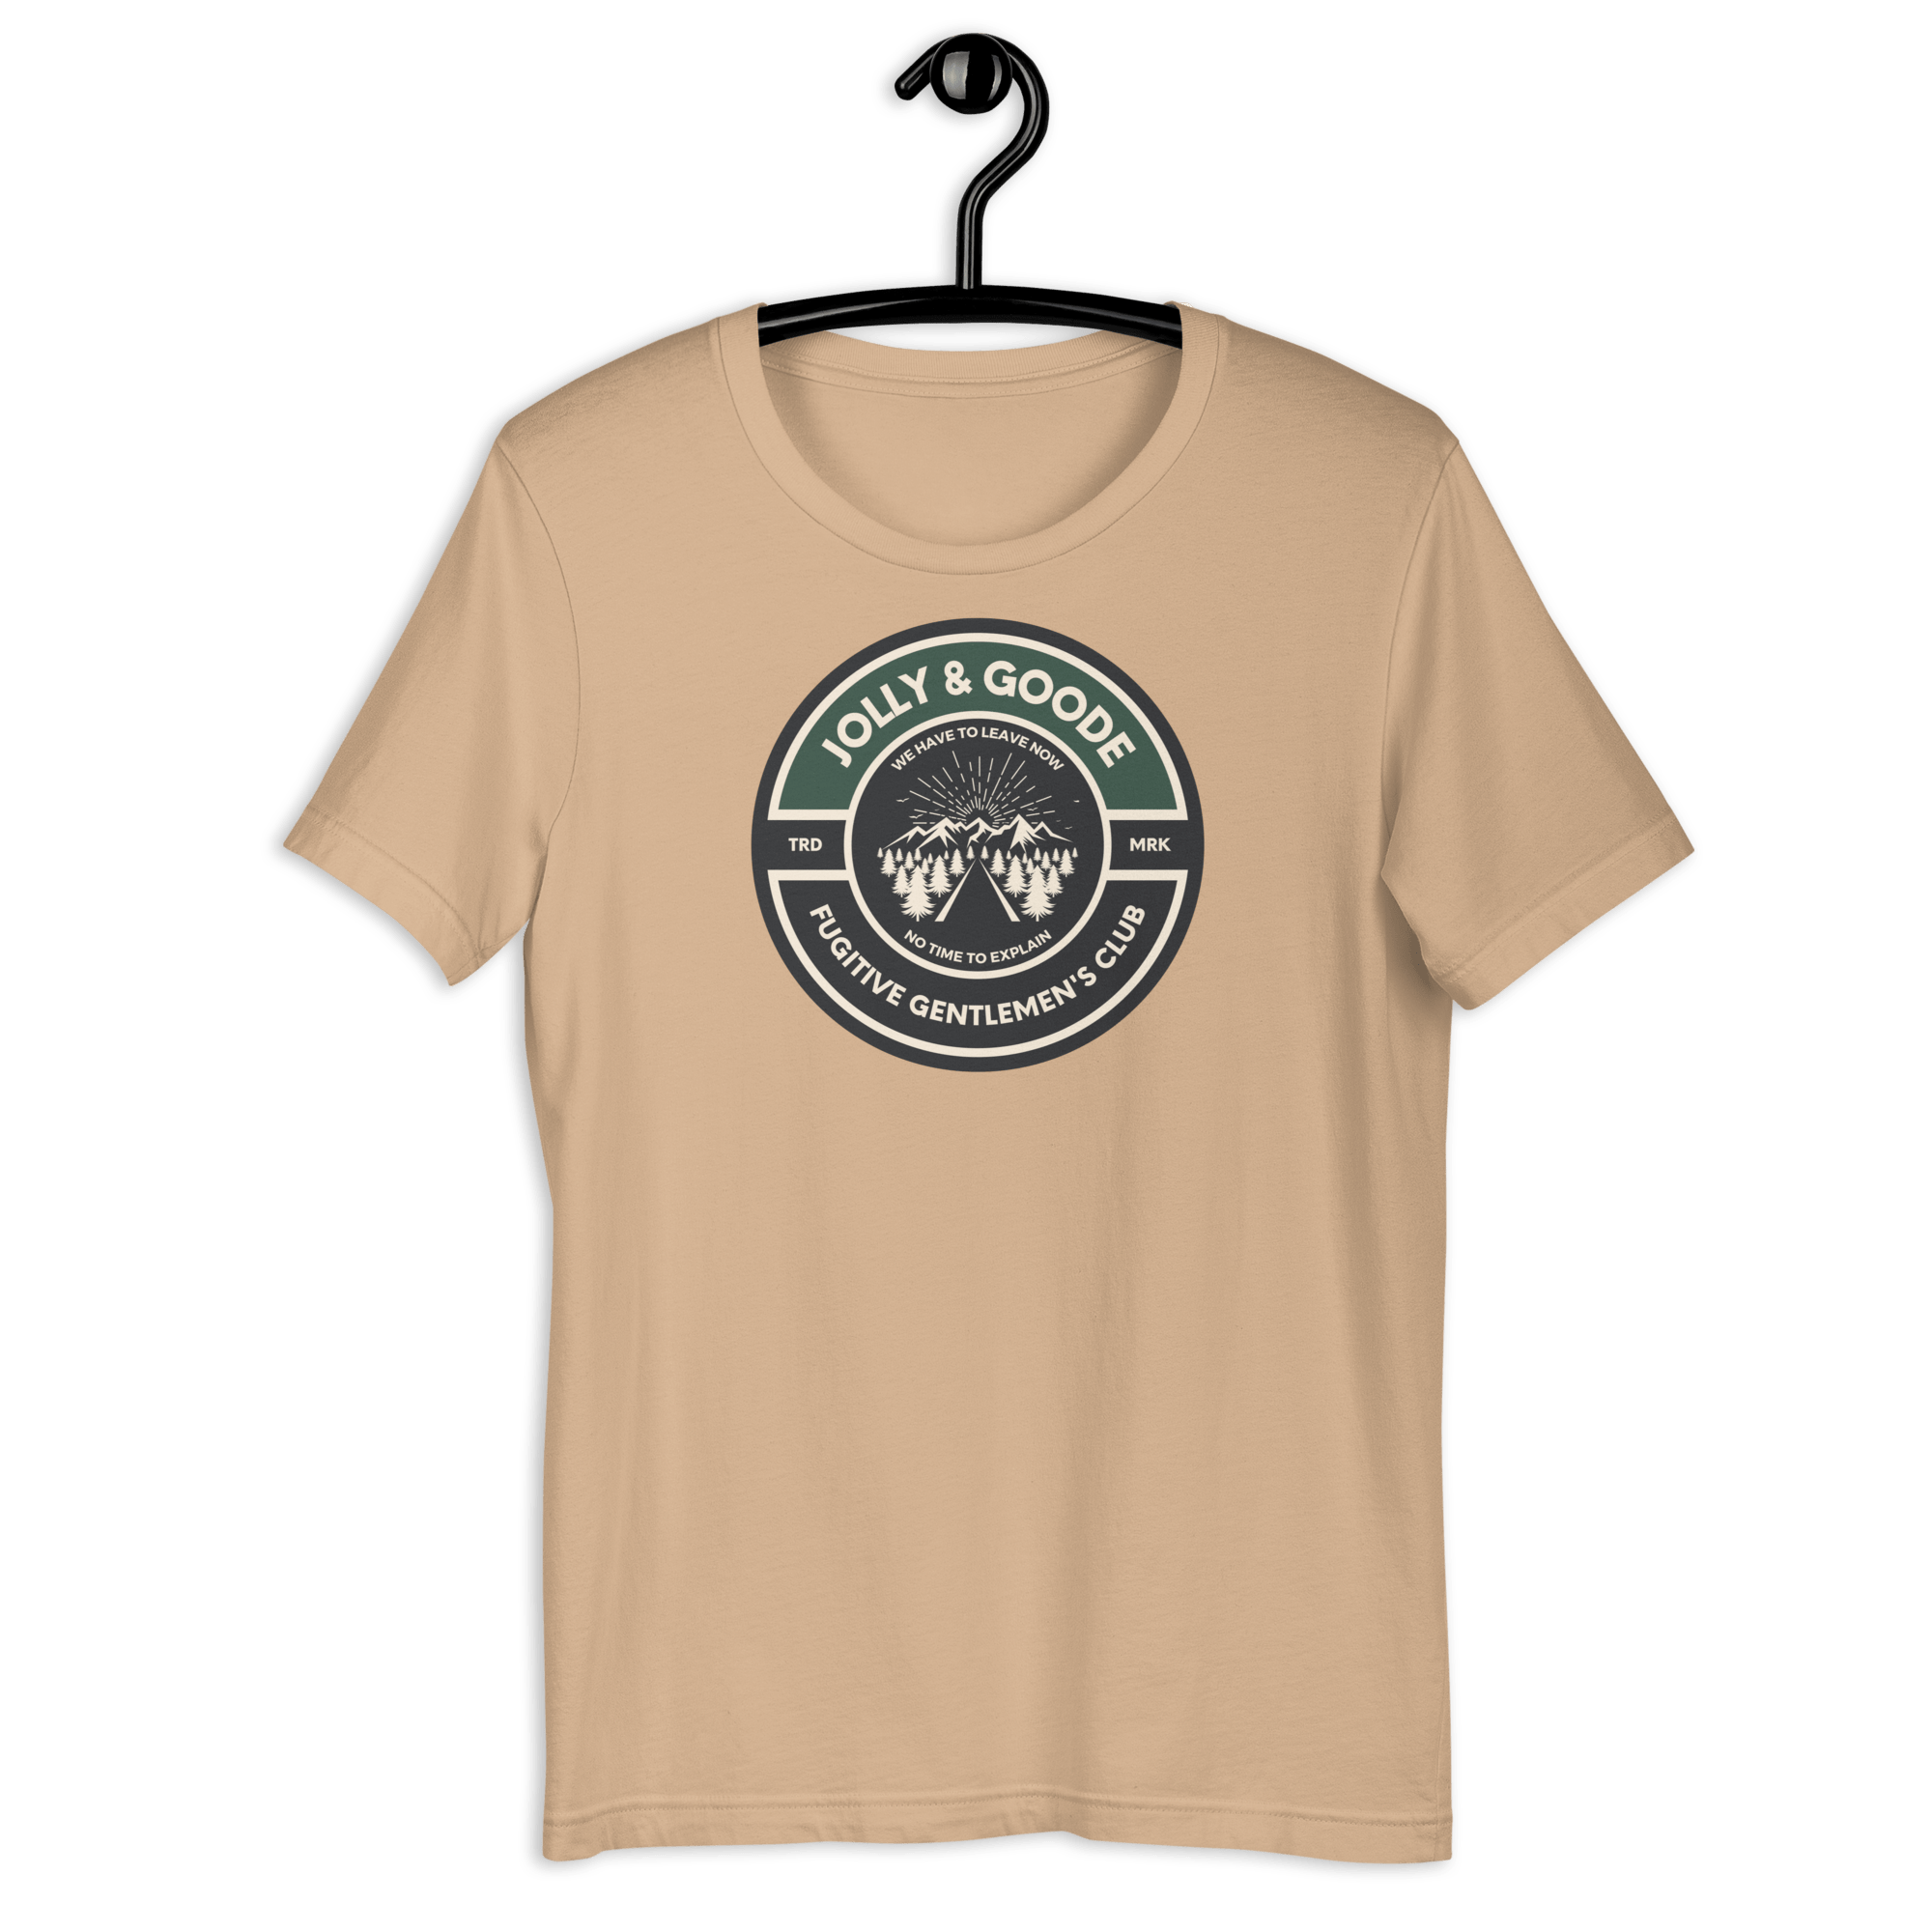 Fugitive Gentlemen's Club T-shirt Tan / S Shirts & Tops Jolly & Goode